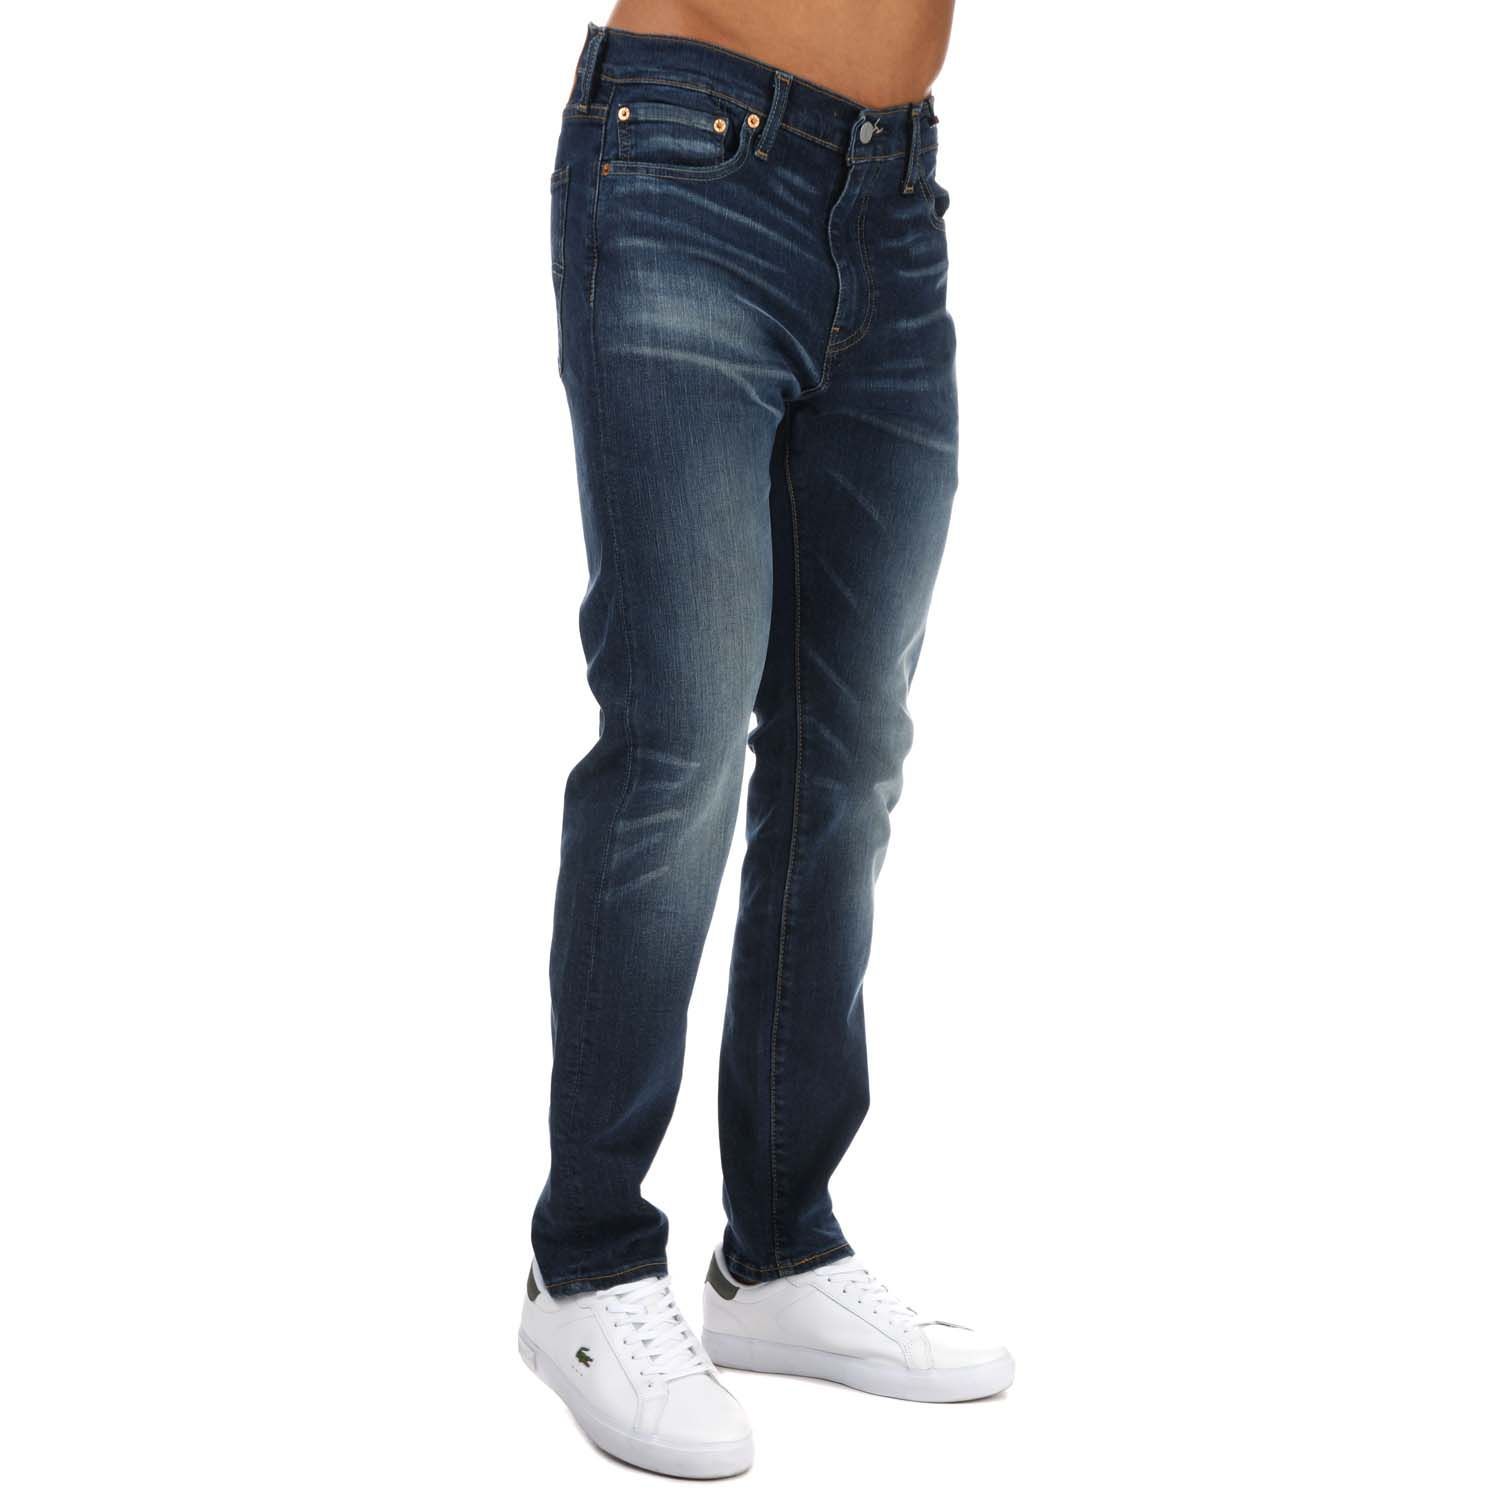 Men's Levis 510 Skinny Brick Wall Jeans in Denim